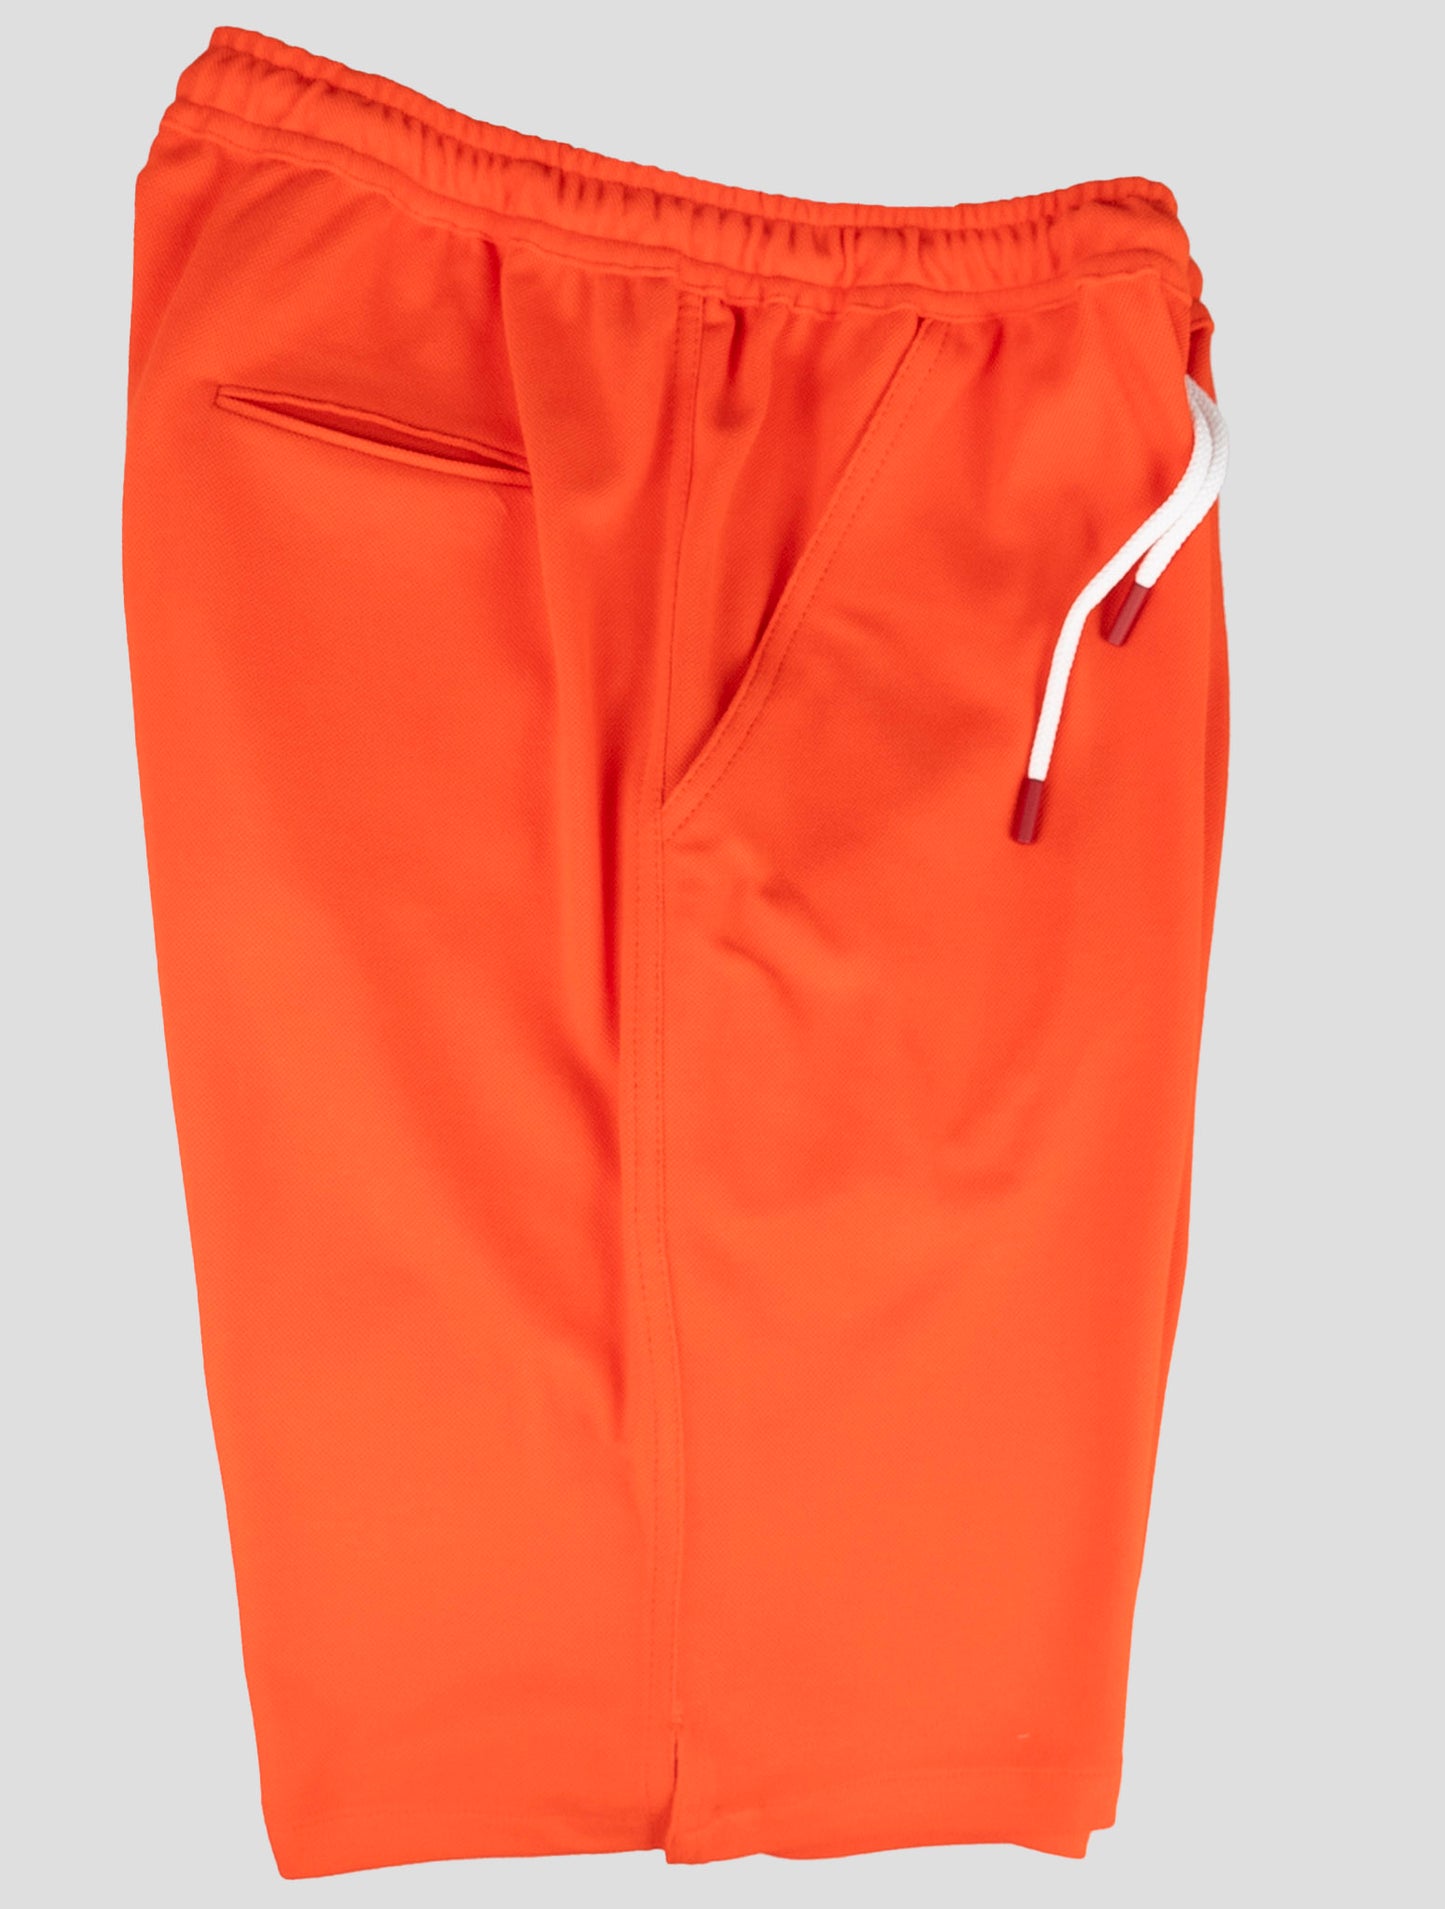 Traje a juego Kiton-Blanco Umbi y naranja pantalones cortos chándal